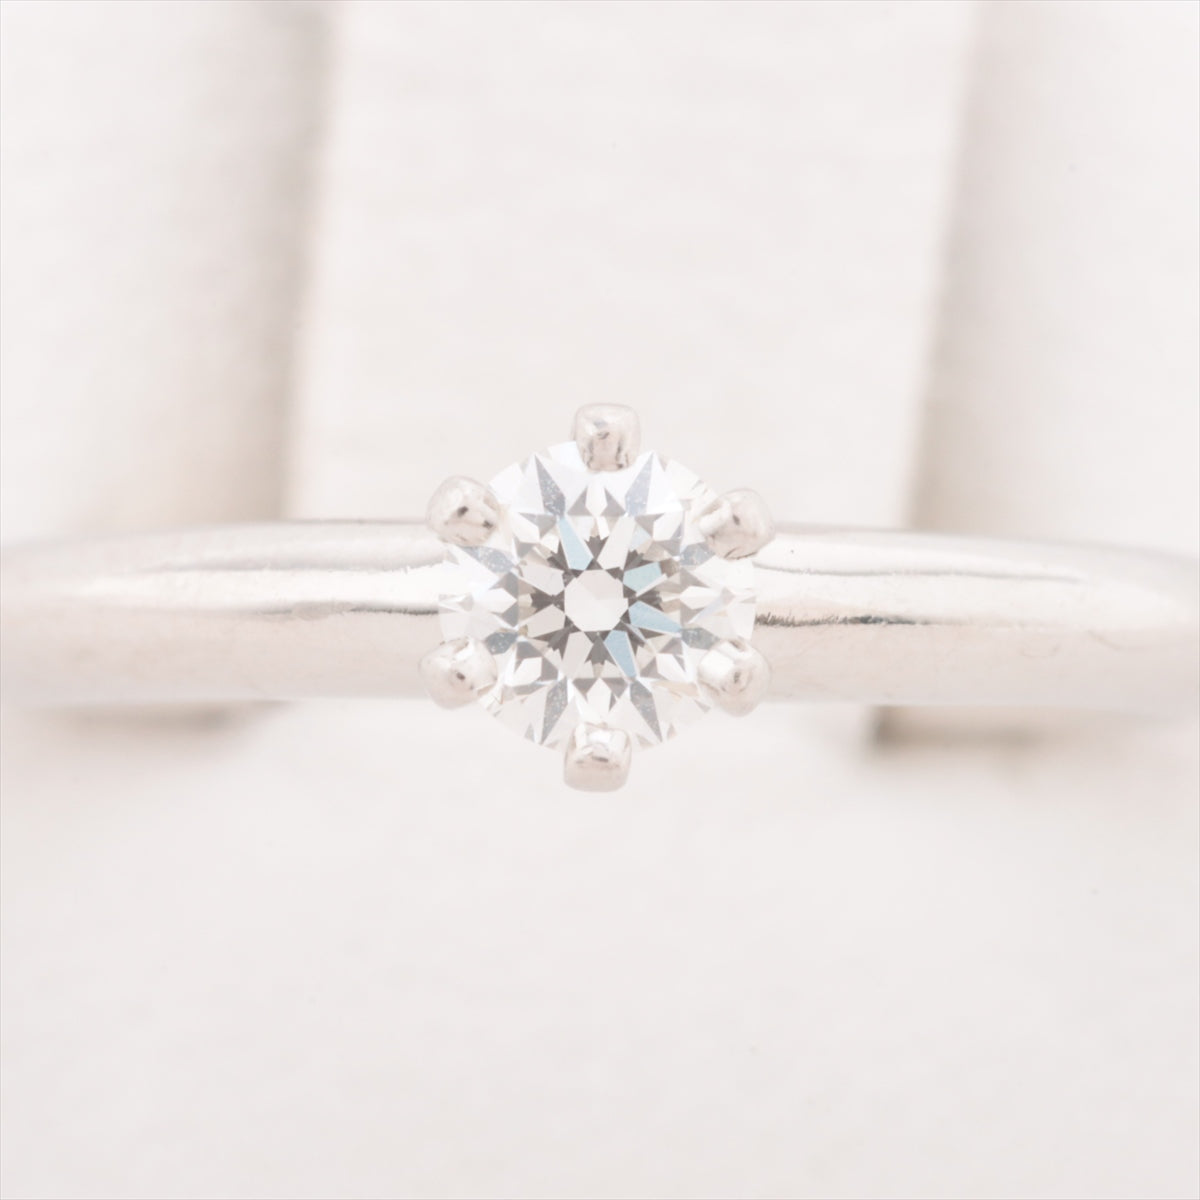 Tiffany Solitaire Diamond Ring Pt950 3.2g 0.21